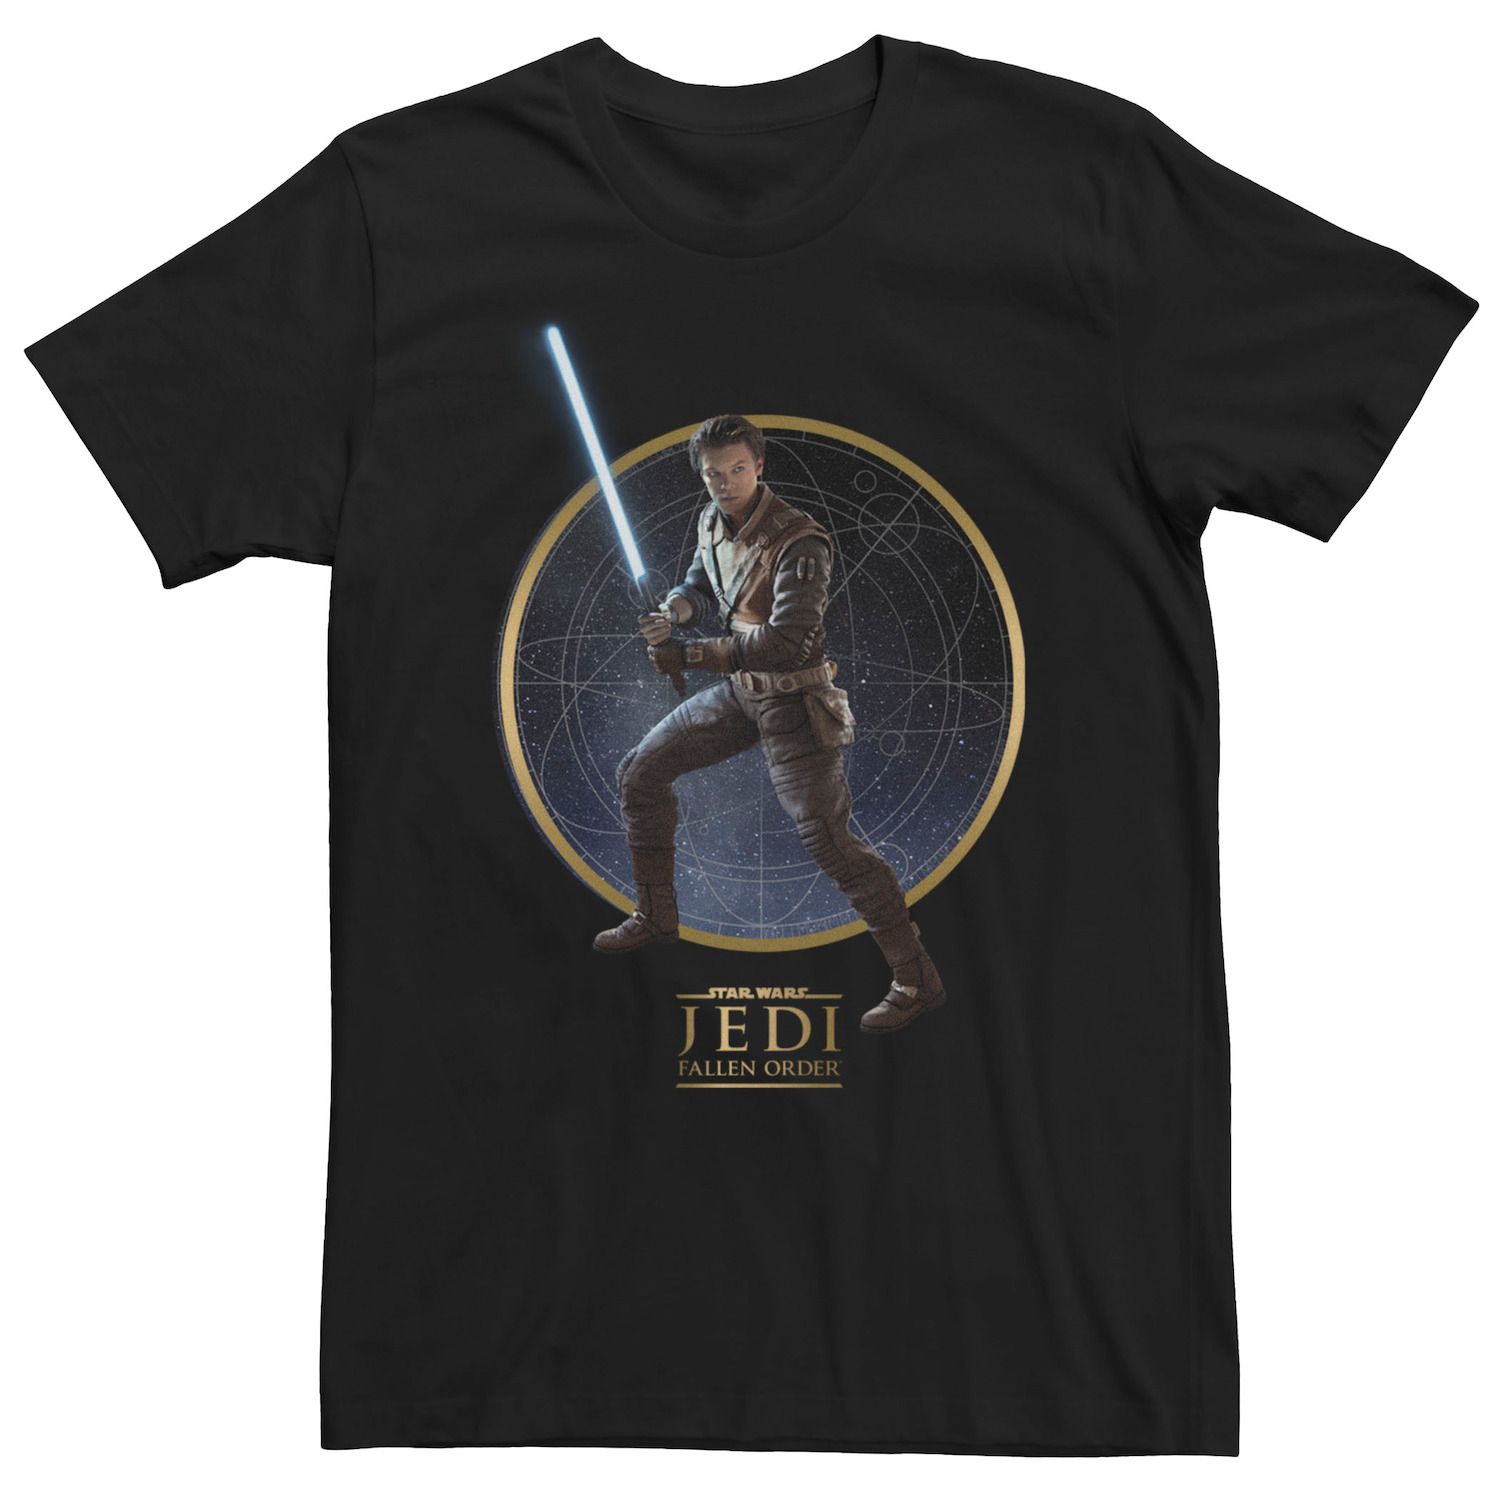 Мужская футболка с рисунком «Звездные войны: Падший орден джедаев» Licensed Character